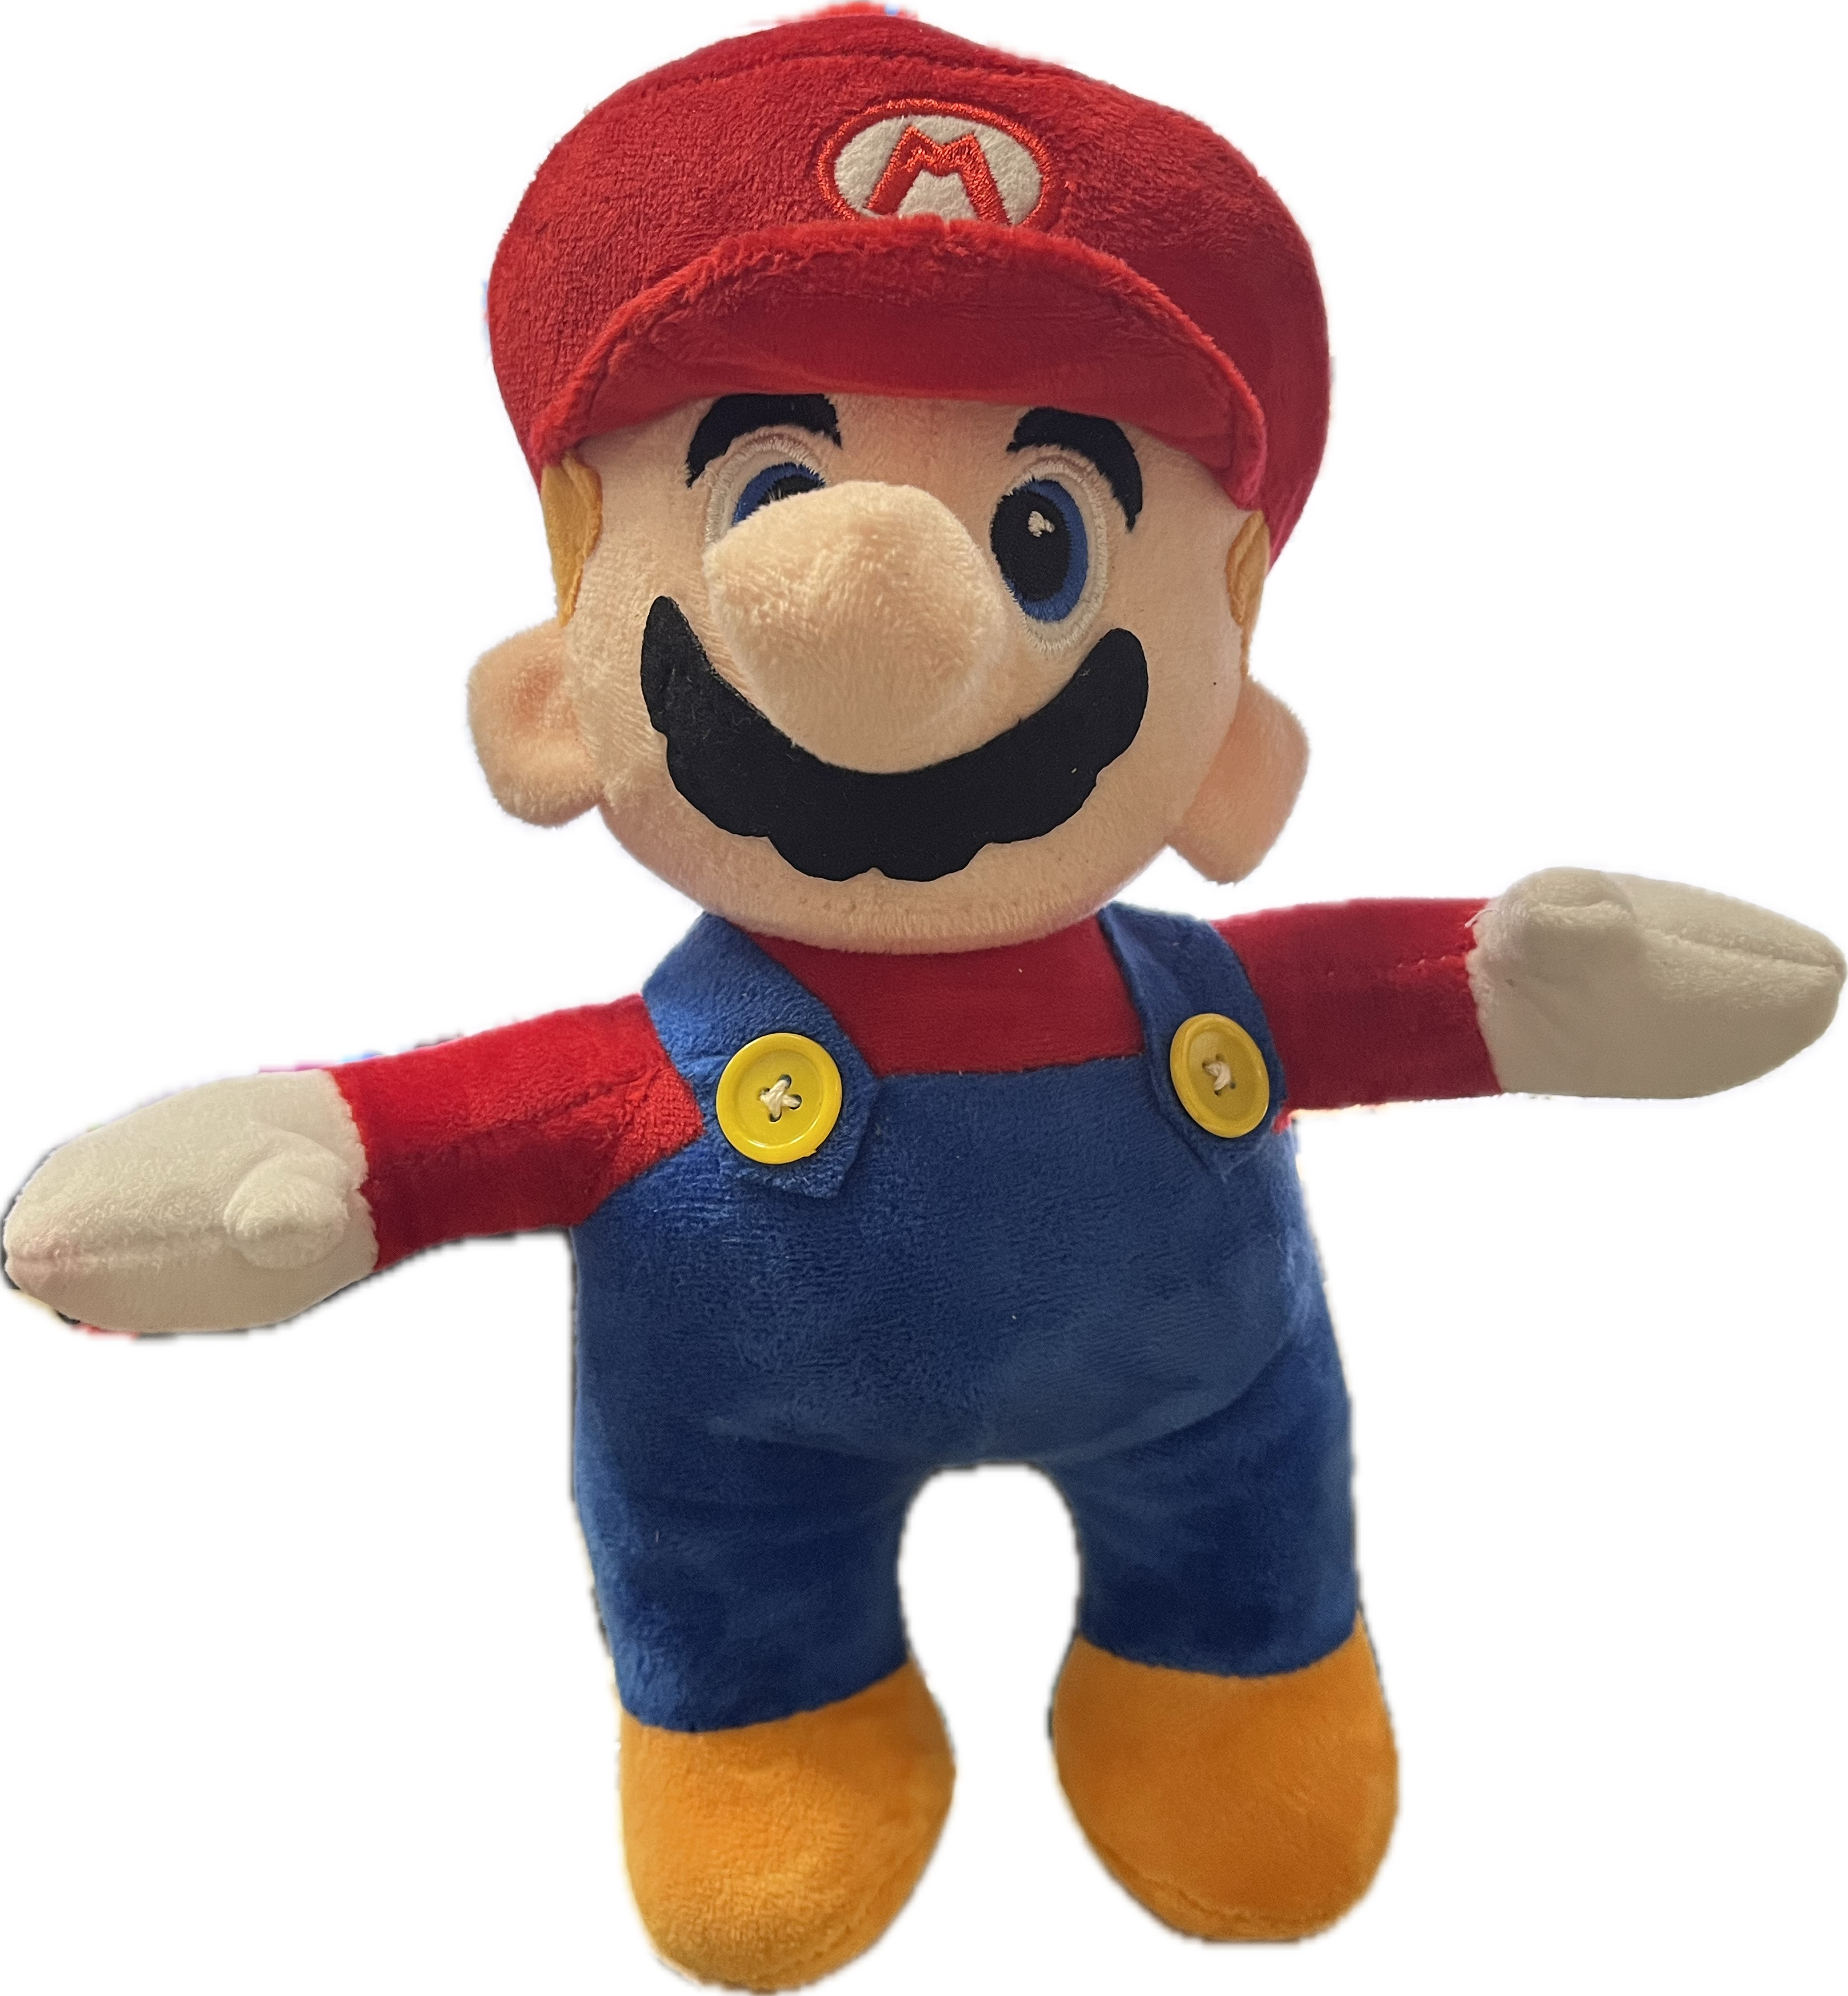 Mario Plüssfigura - Ajándéktárgyak Plüssfigura